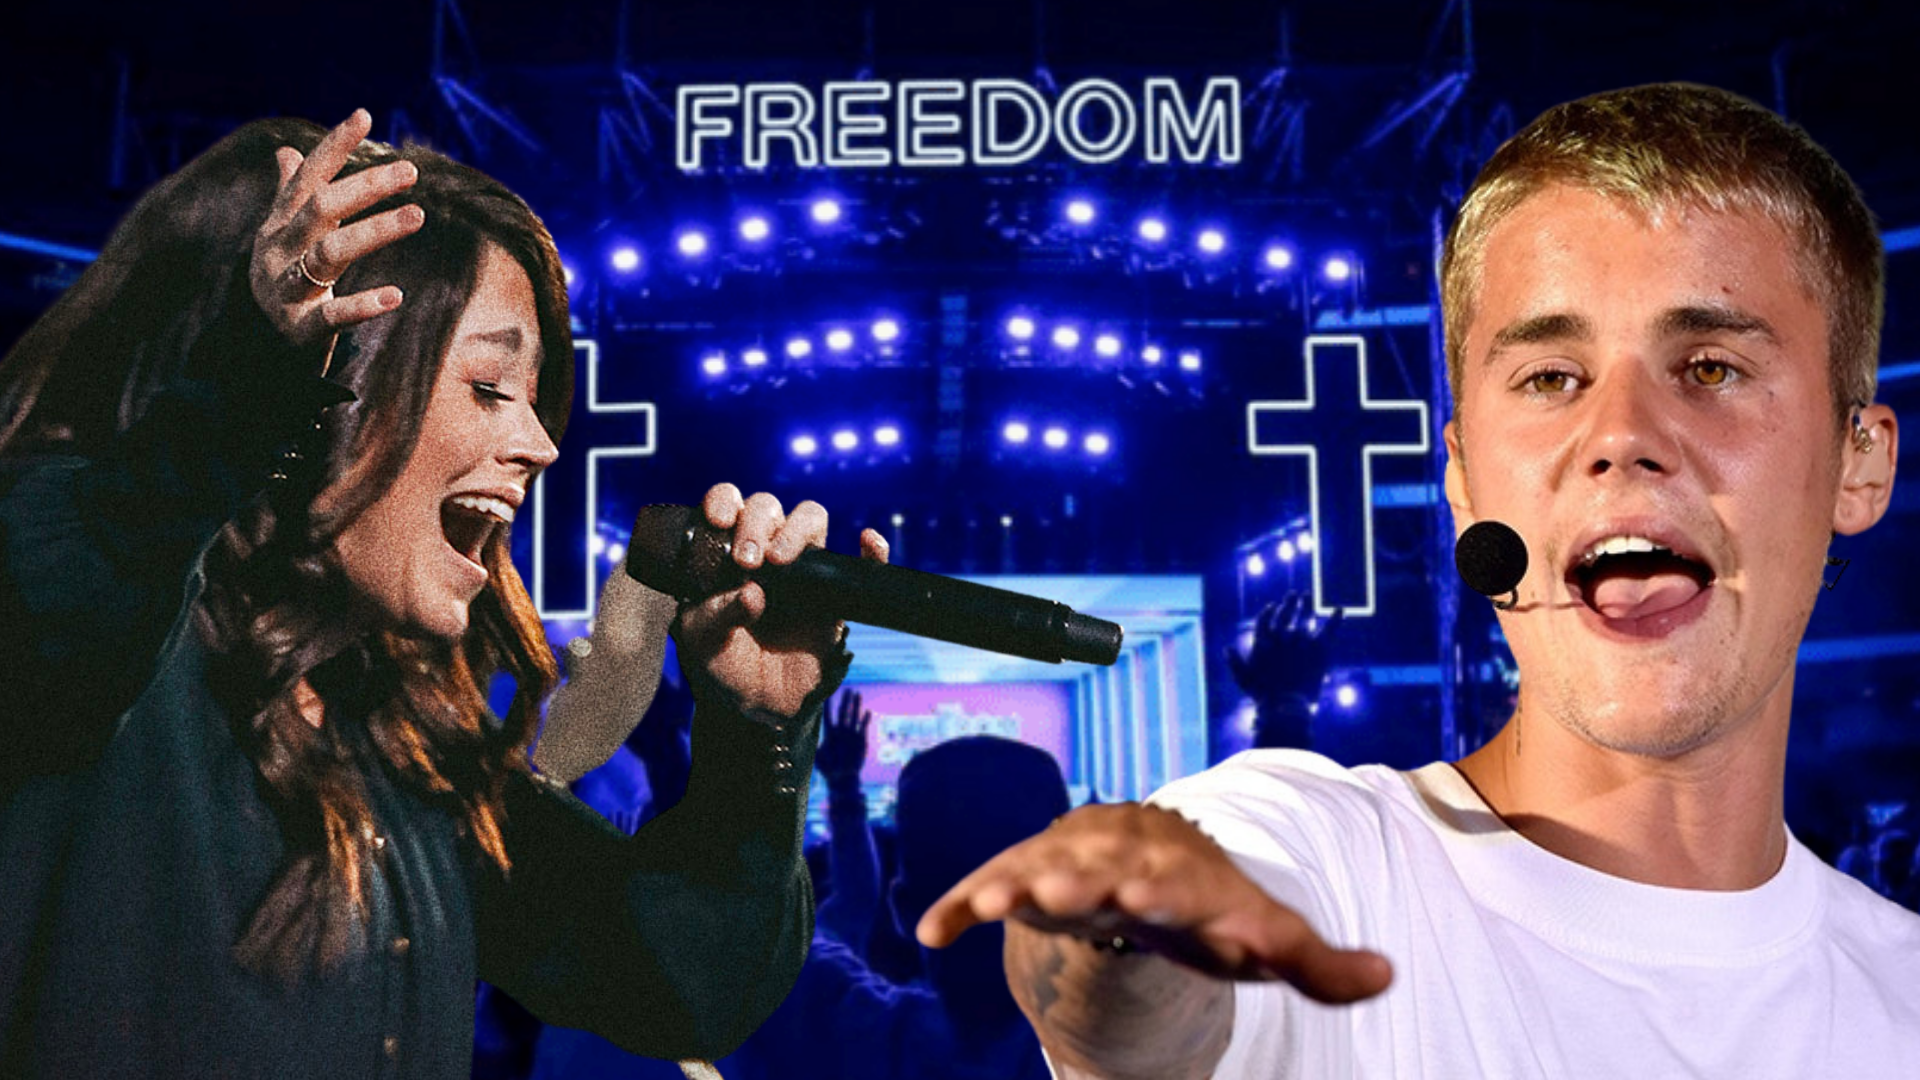 Justin Bieber and Kari Jobe Freedom Experience